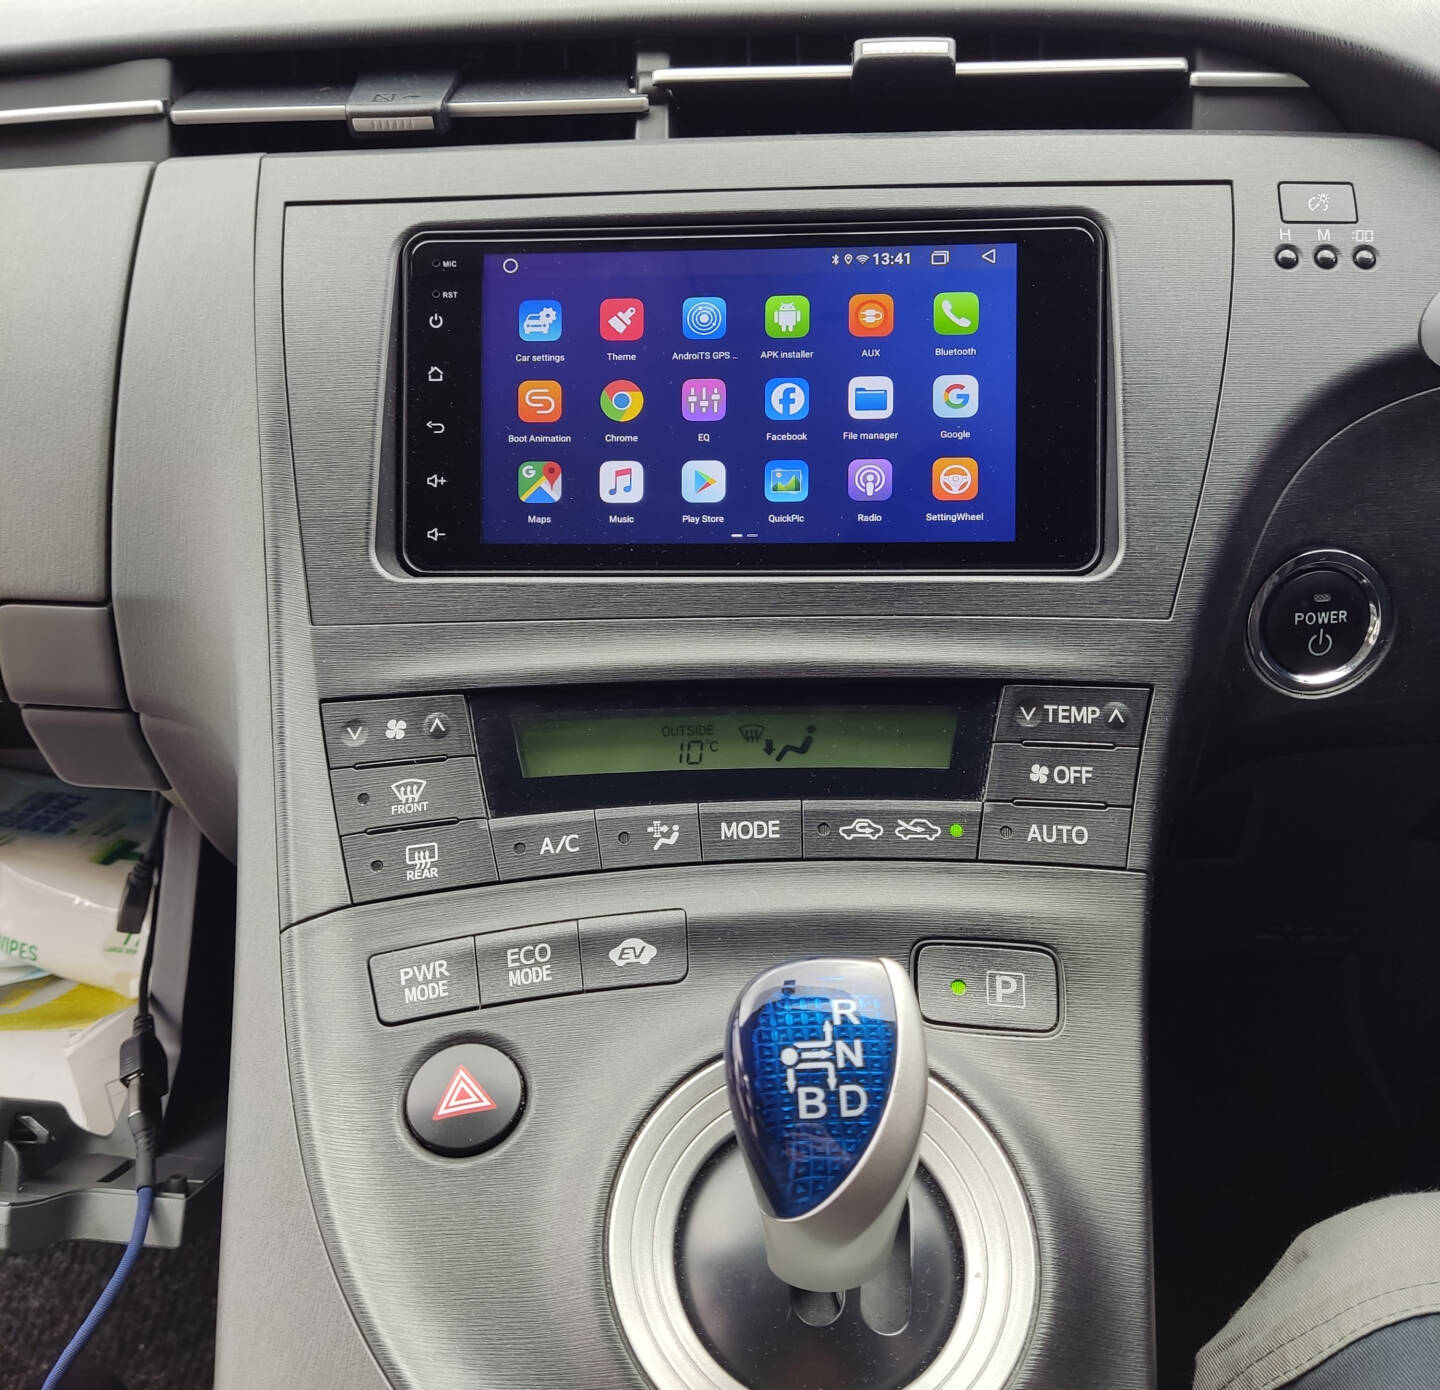 1648644869602 1 scaled - Radio King Ireland - Android Car Radios and CarPlay Systems